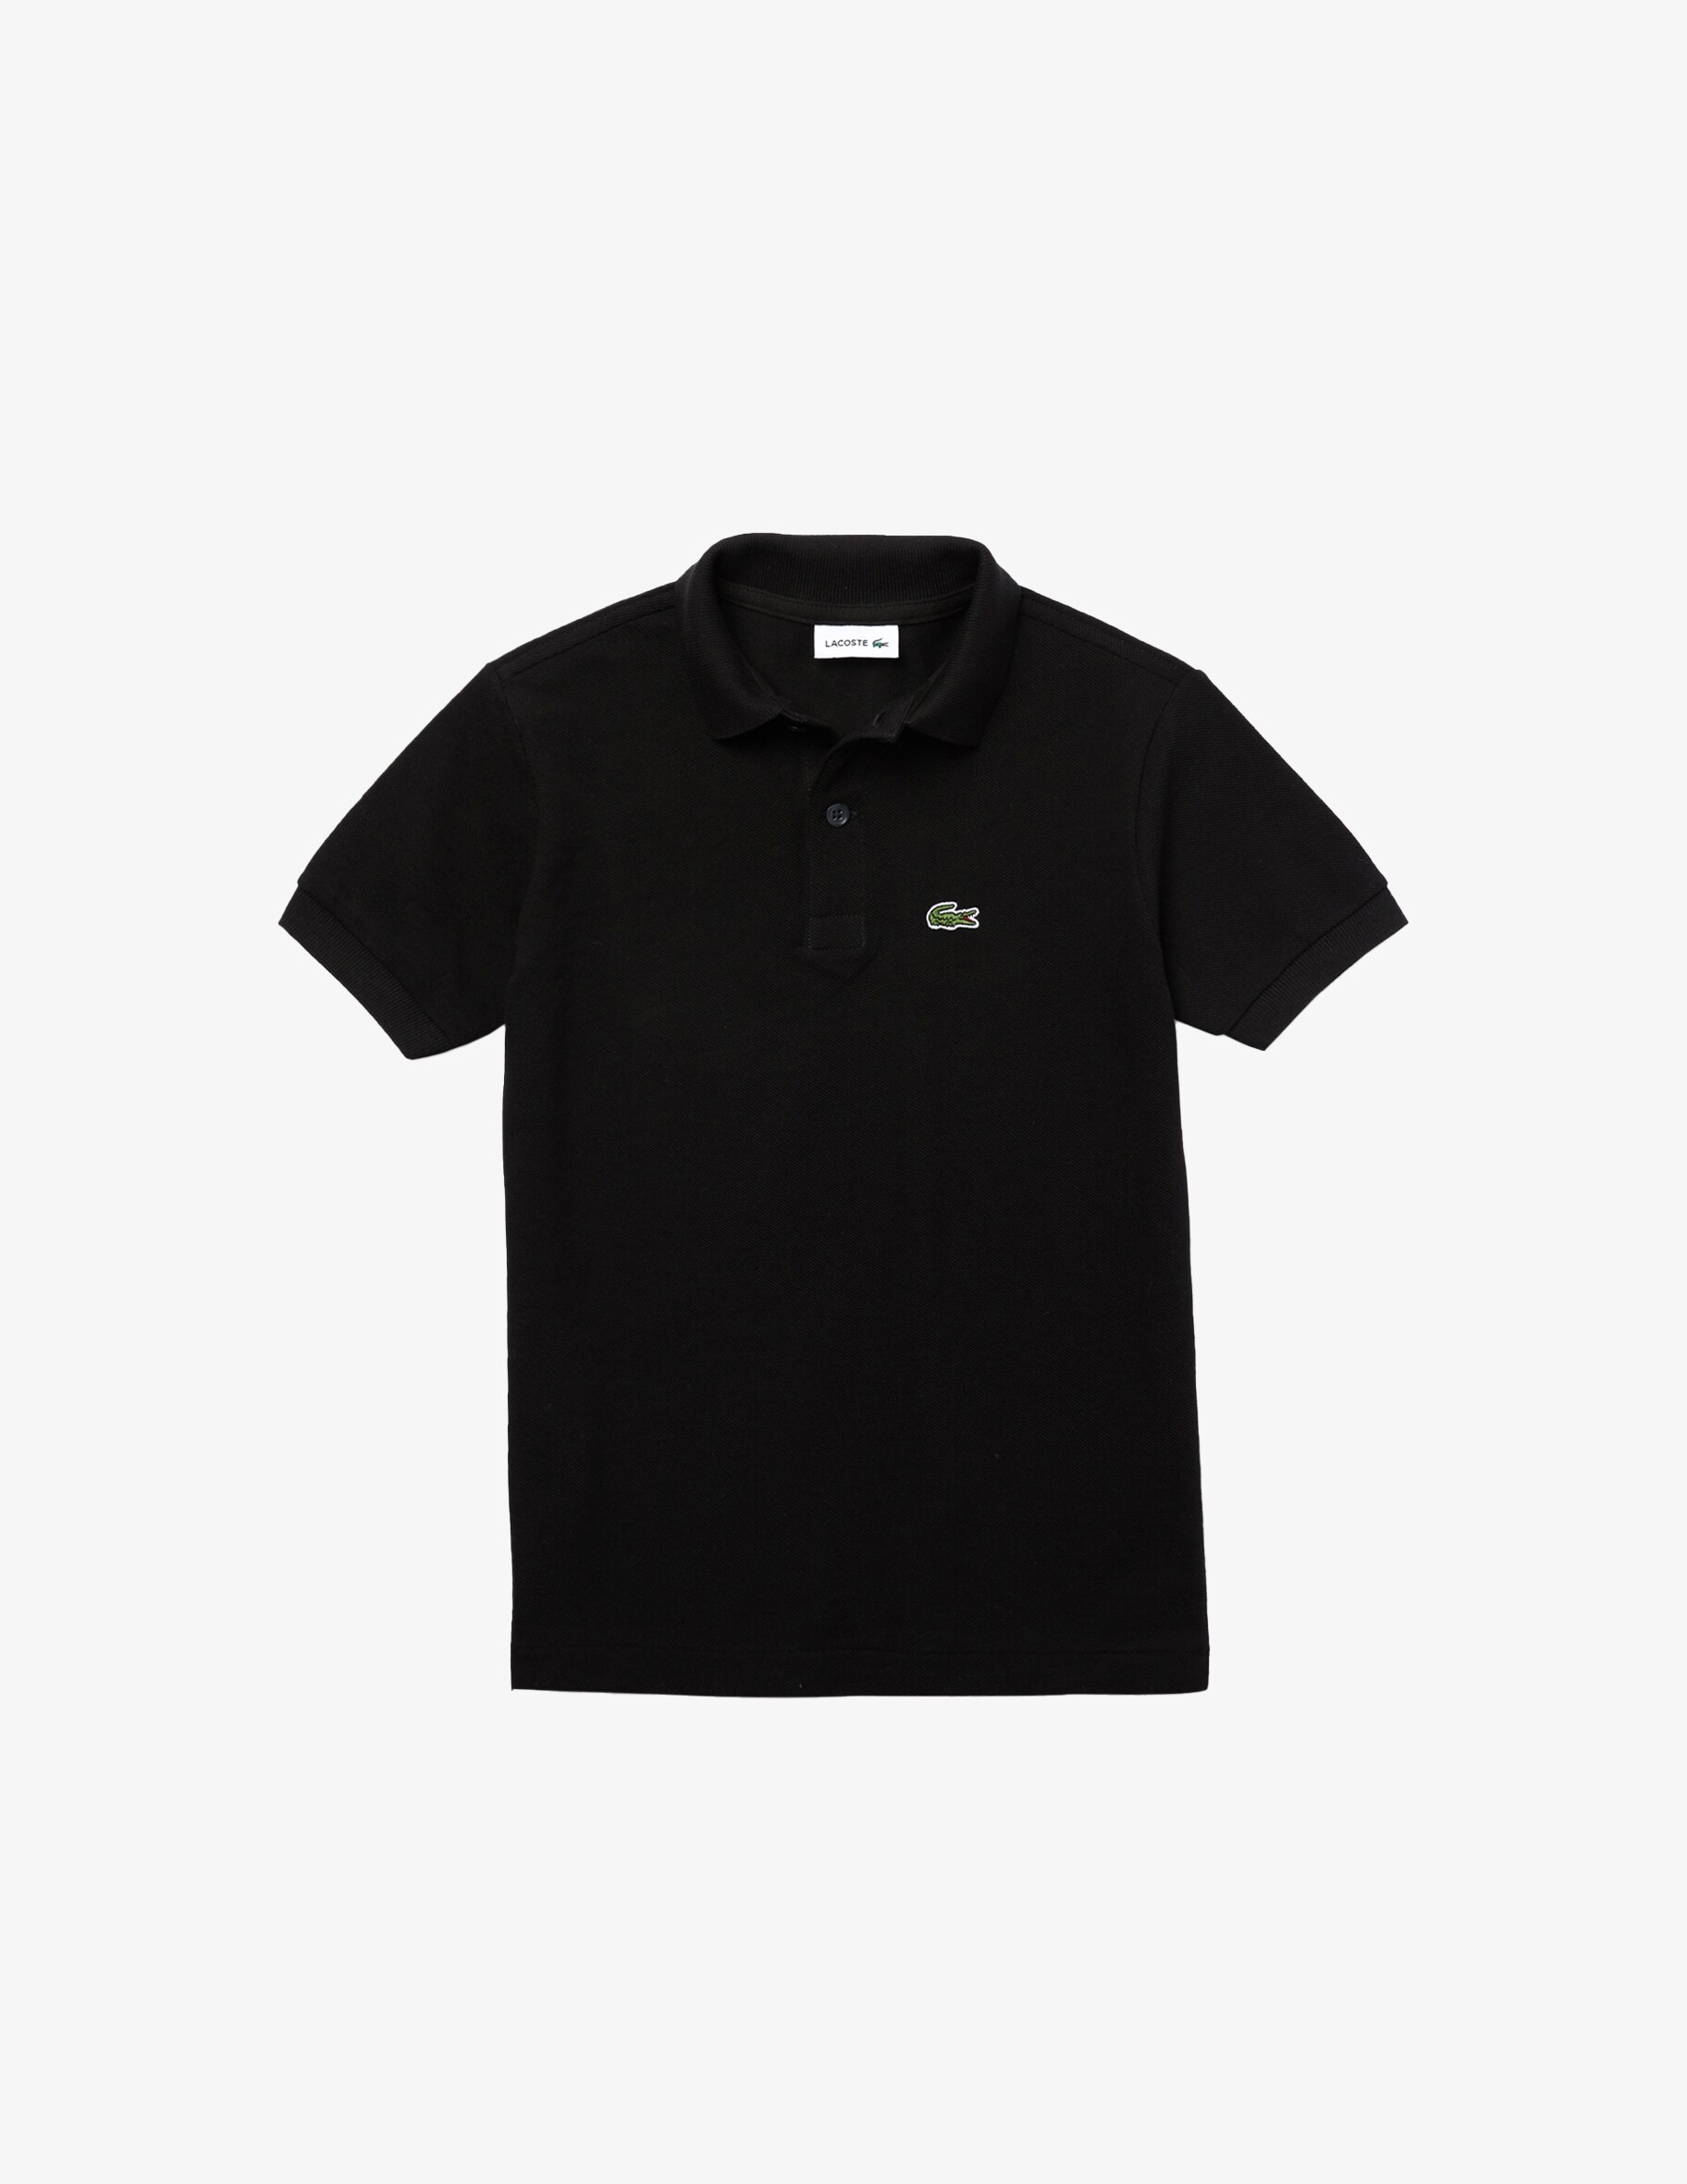 Рубашка-поло с коротким рукавом Lacoste, черный